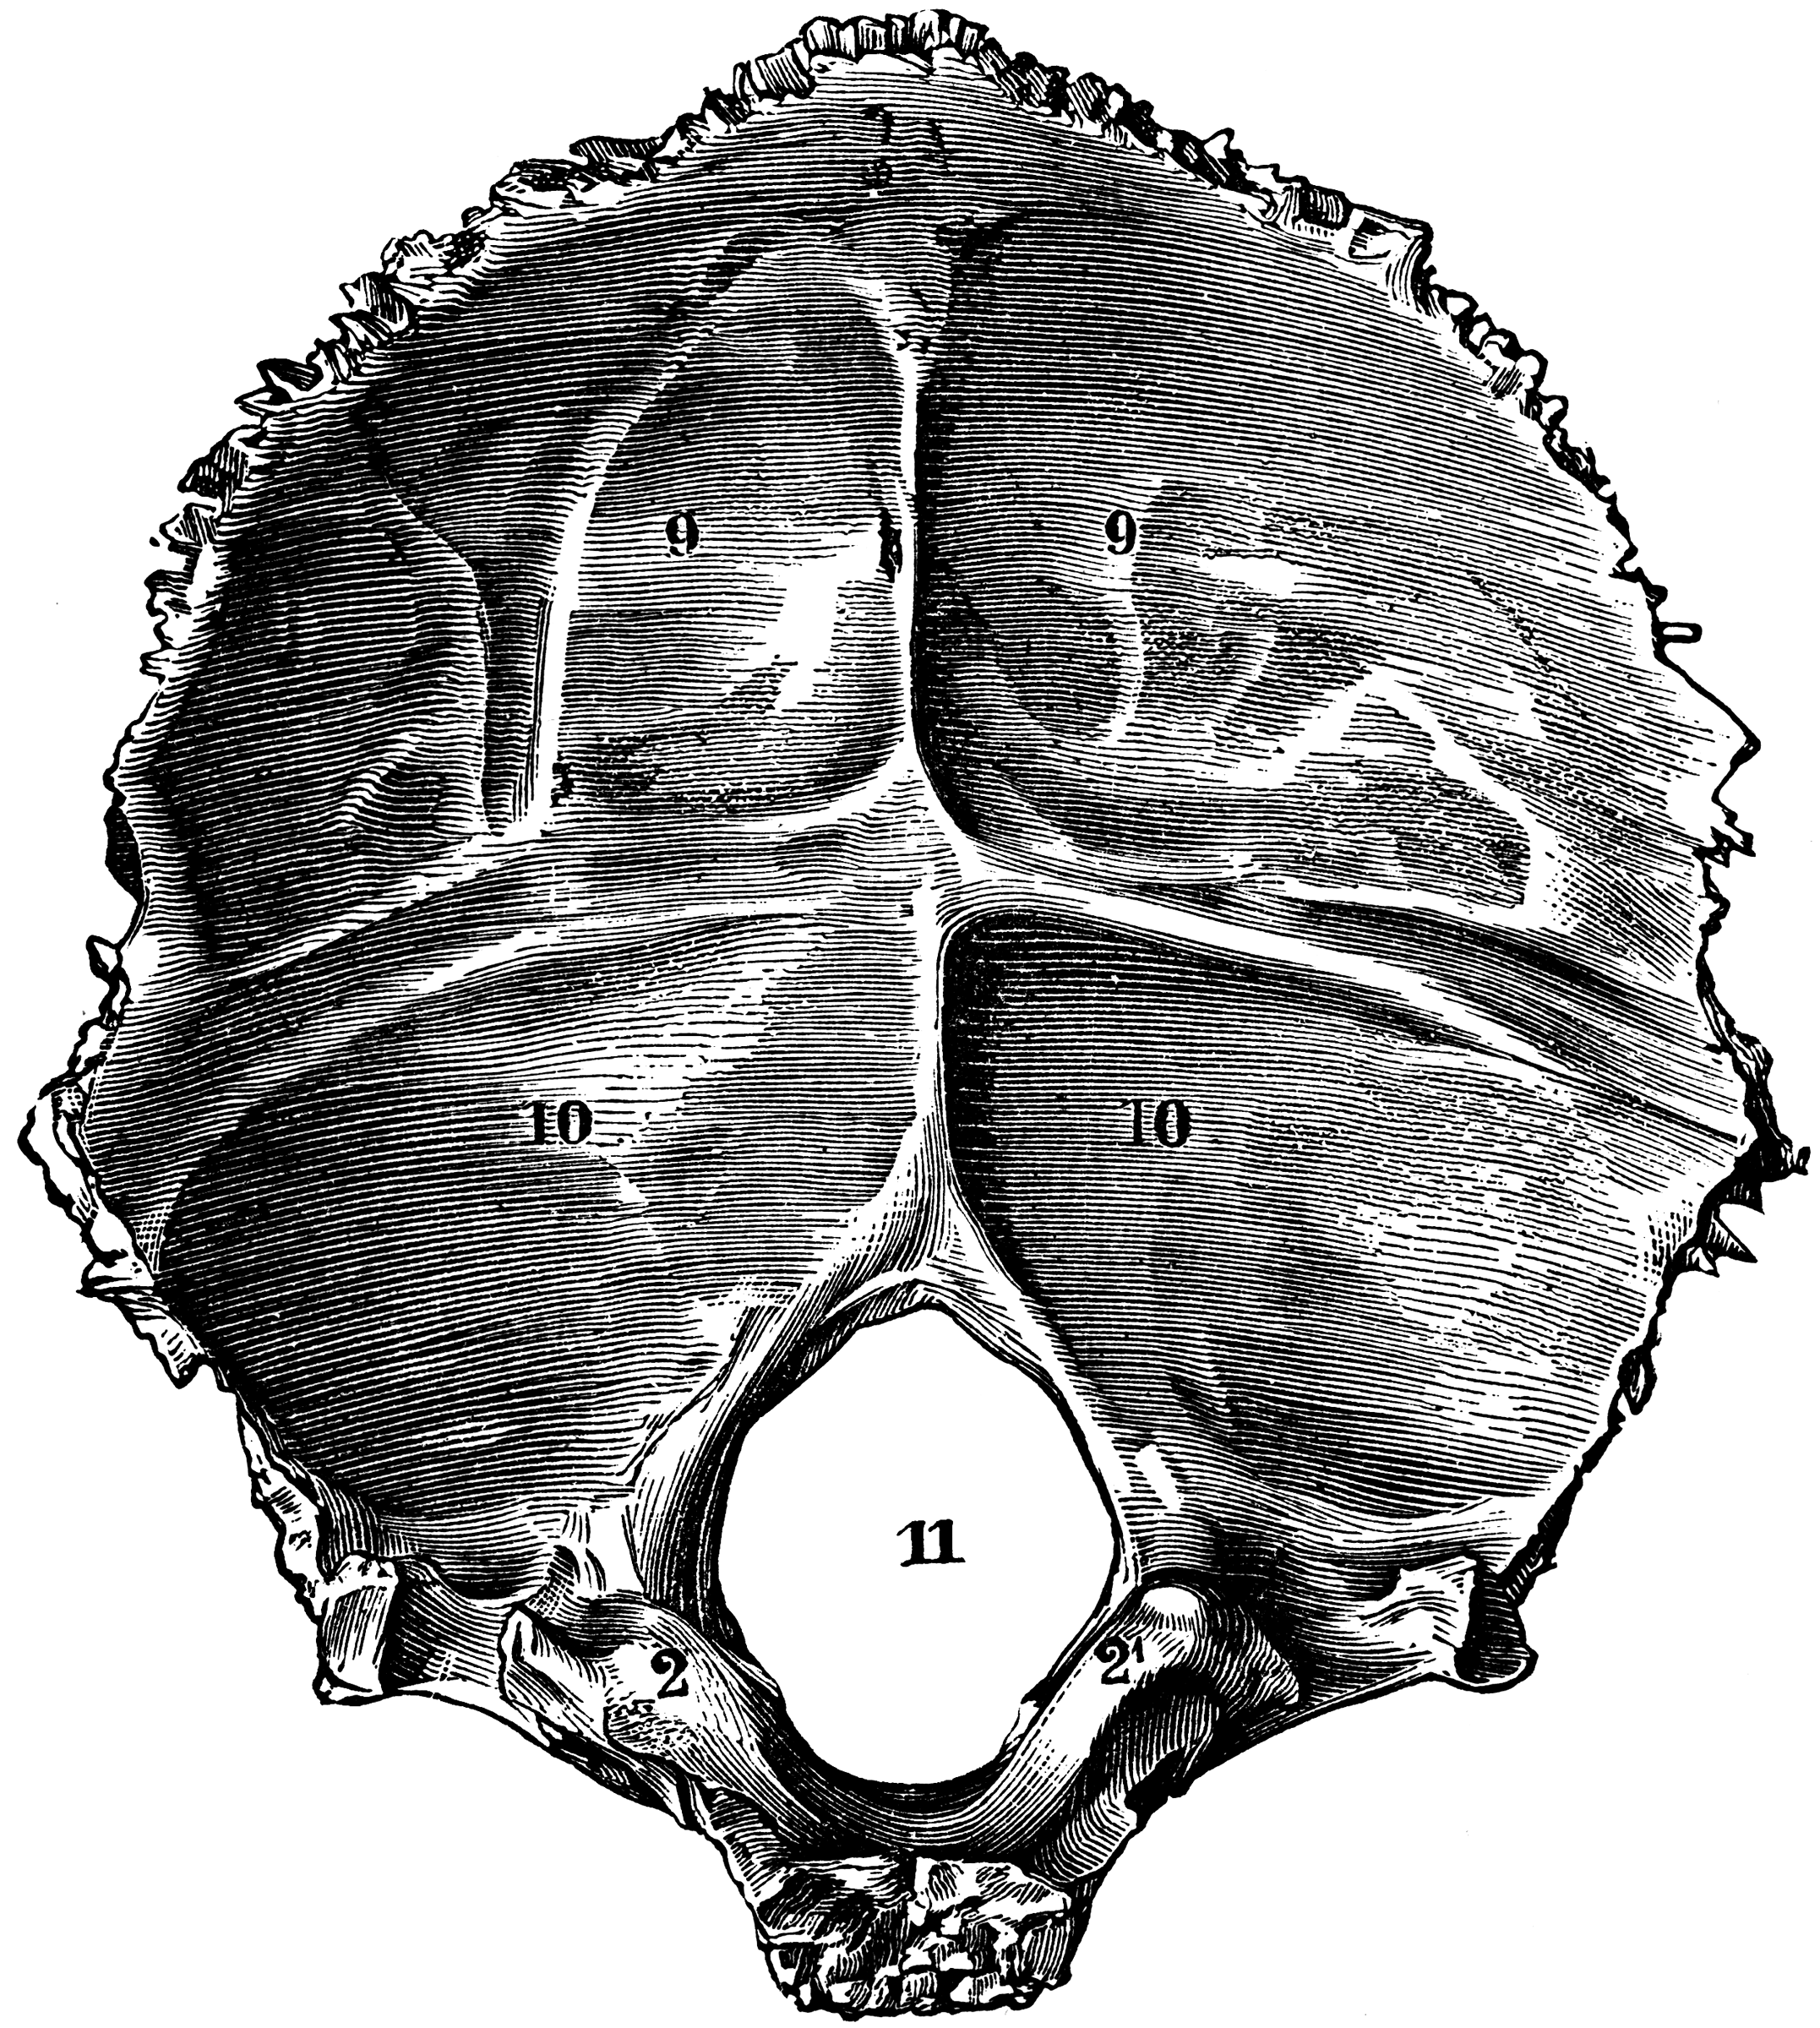 Occipital Bone of the Human Skull | ClipArt ETC